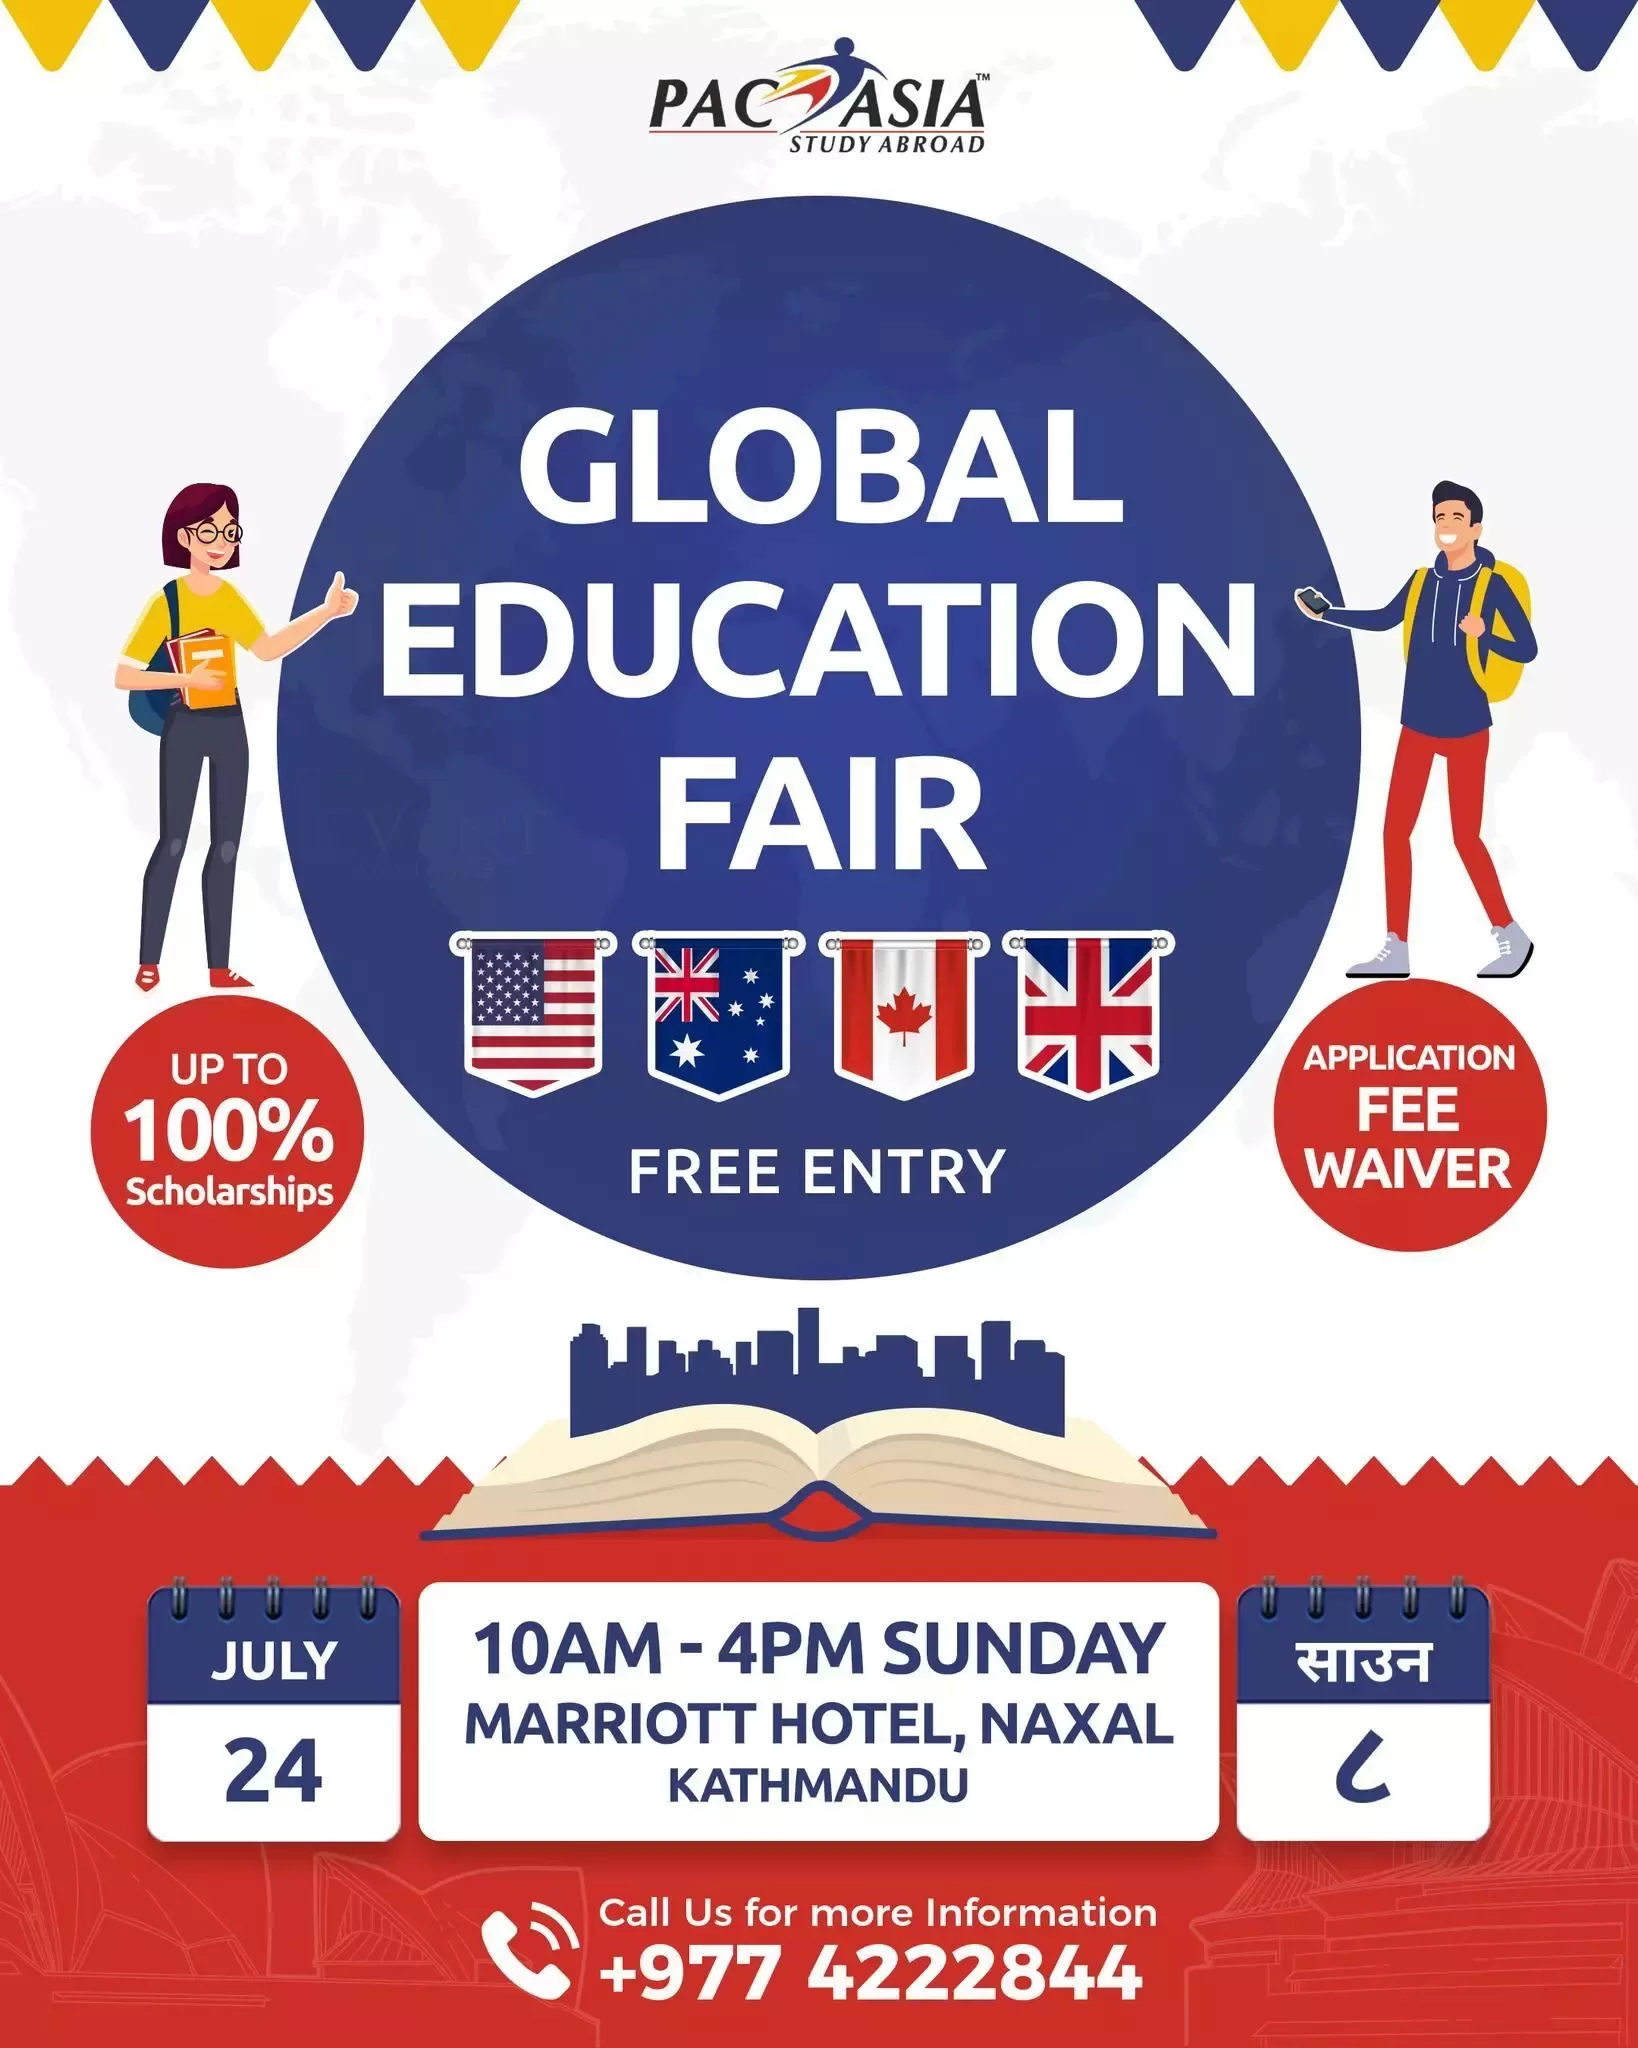 Global Education Fair - PAC Asia Study Abroad